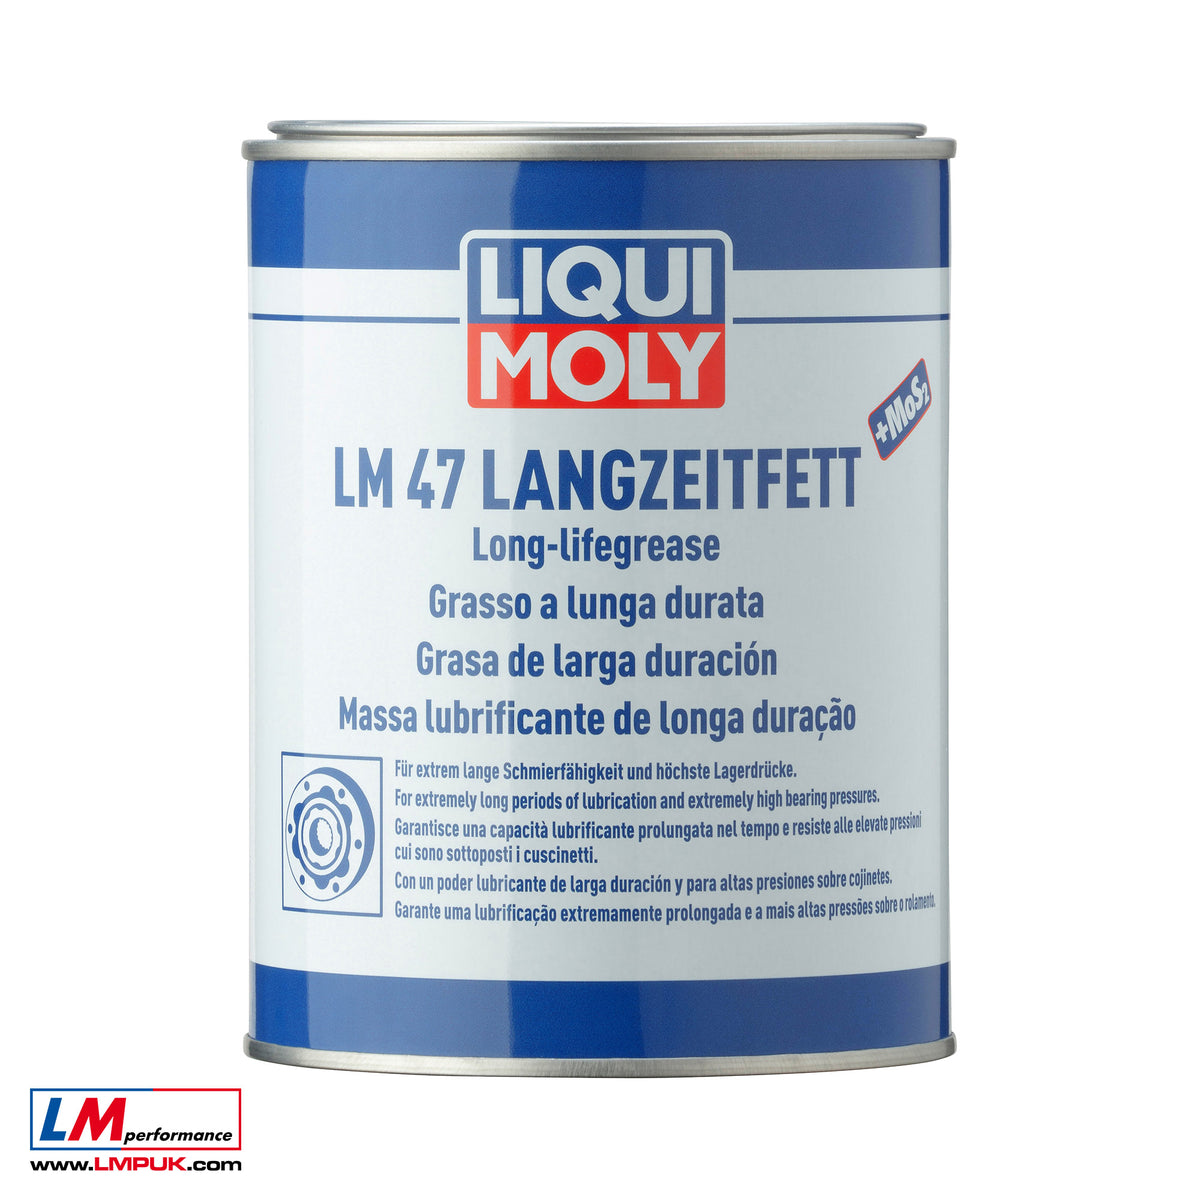 LIQUI MOLY LM 47 Langzeitfett + MoS2 (1 kg) ab 20,09